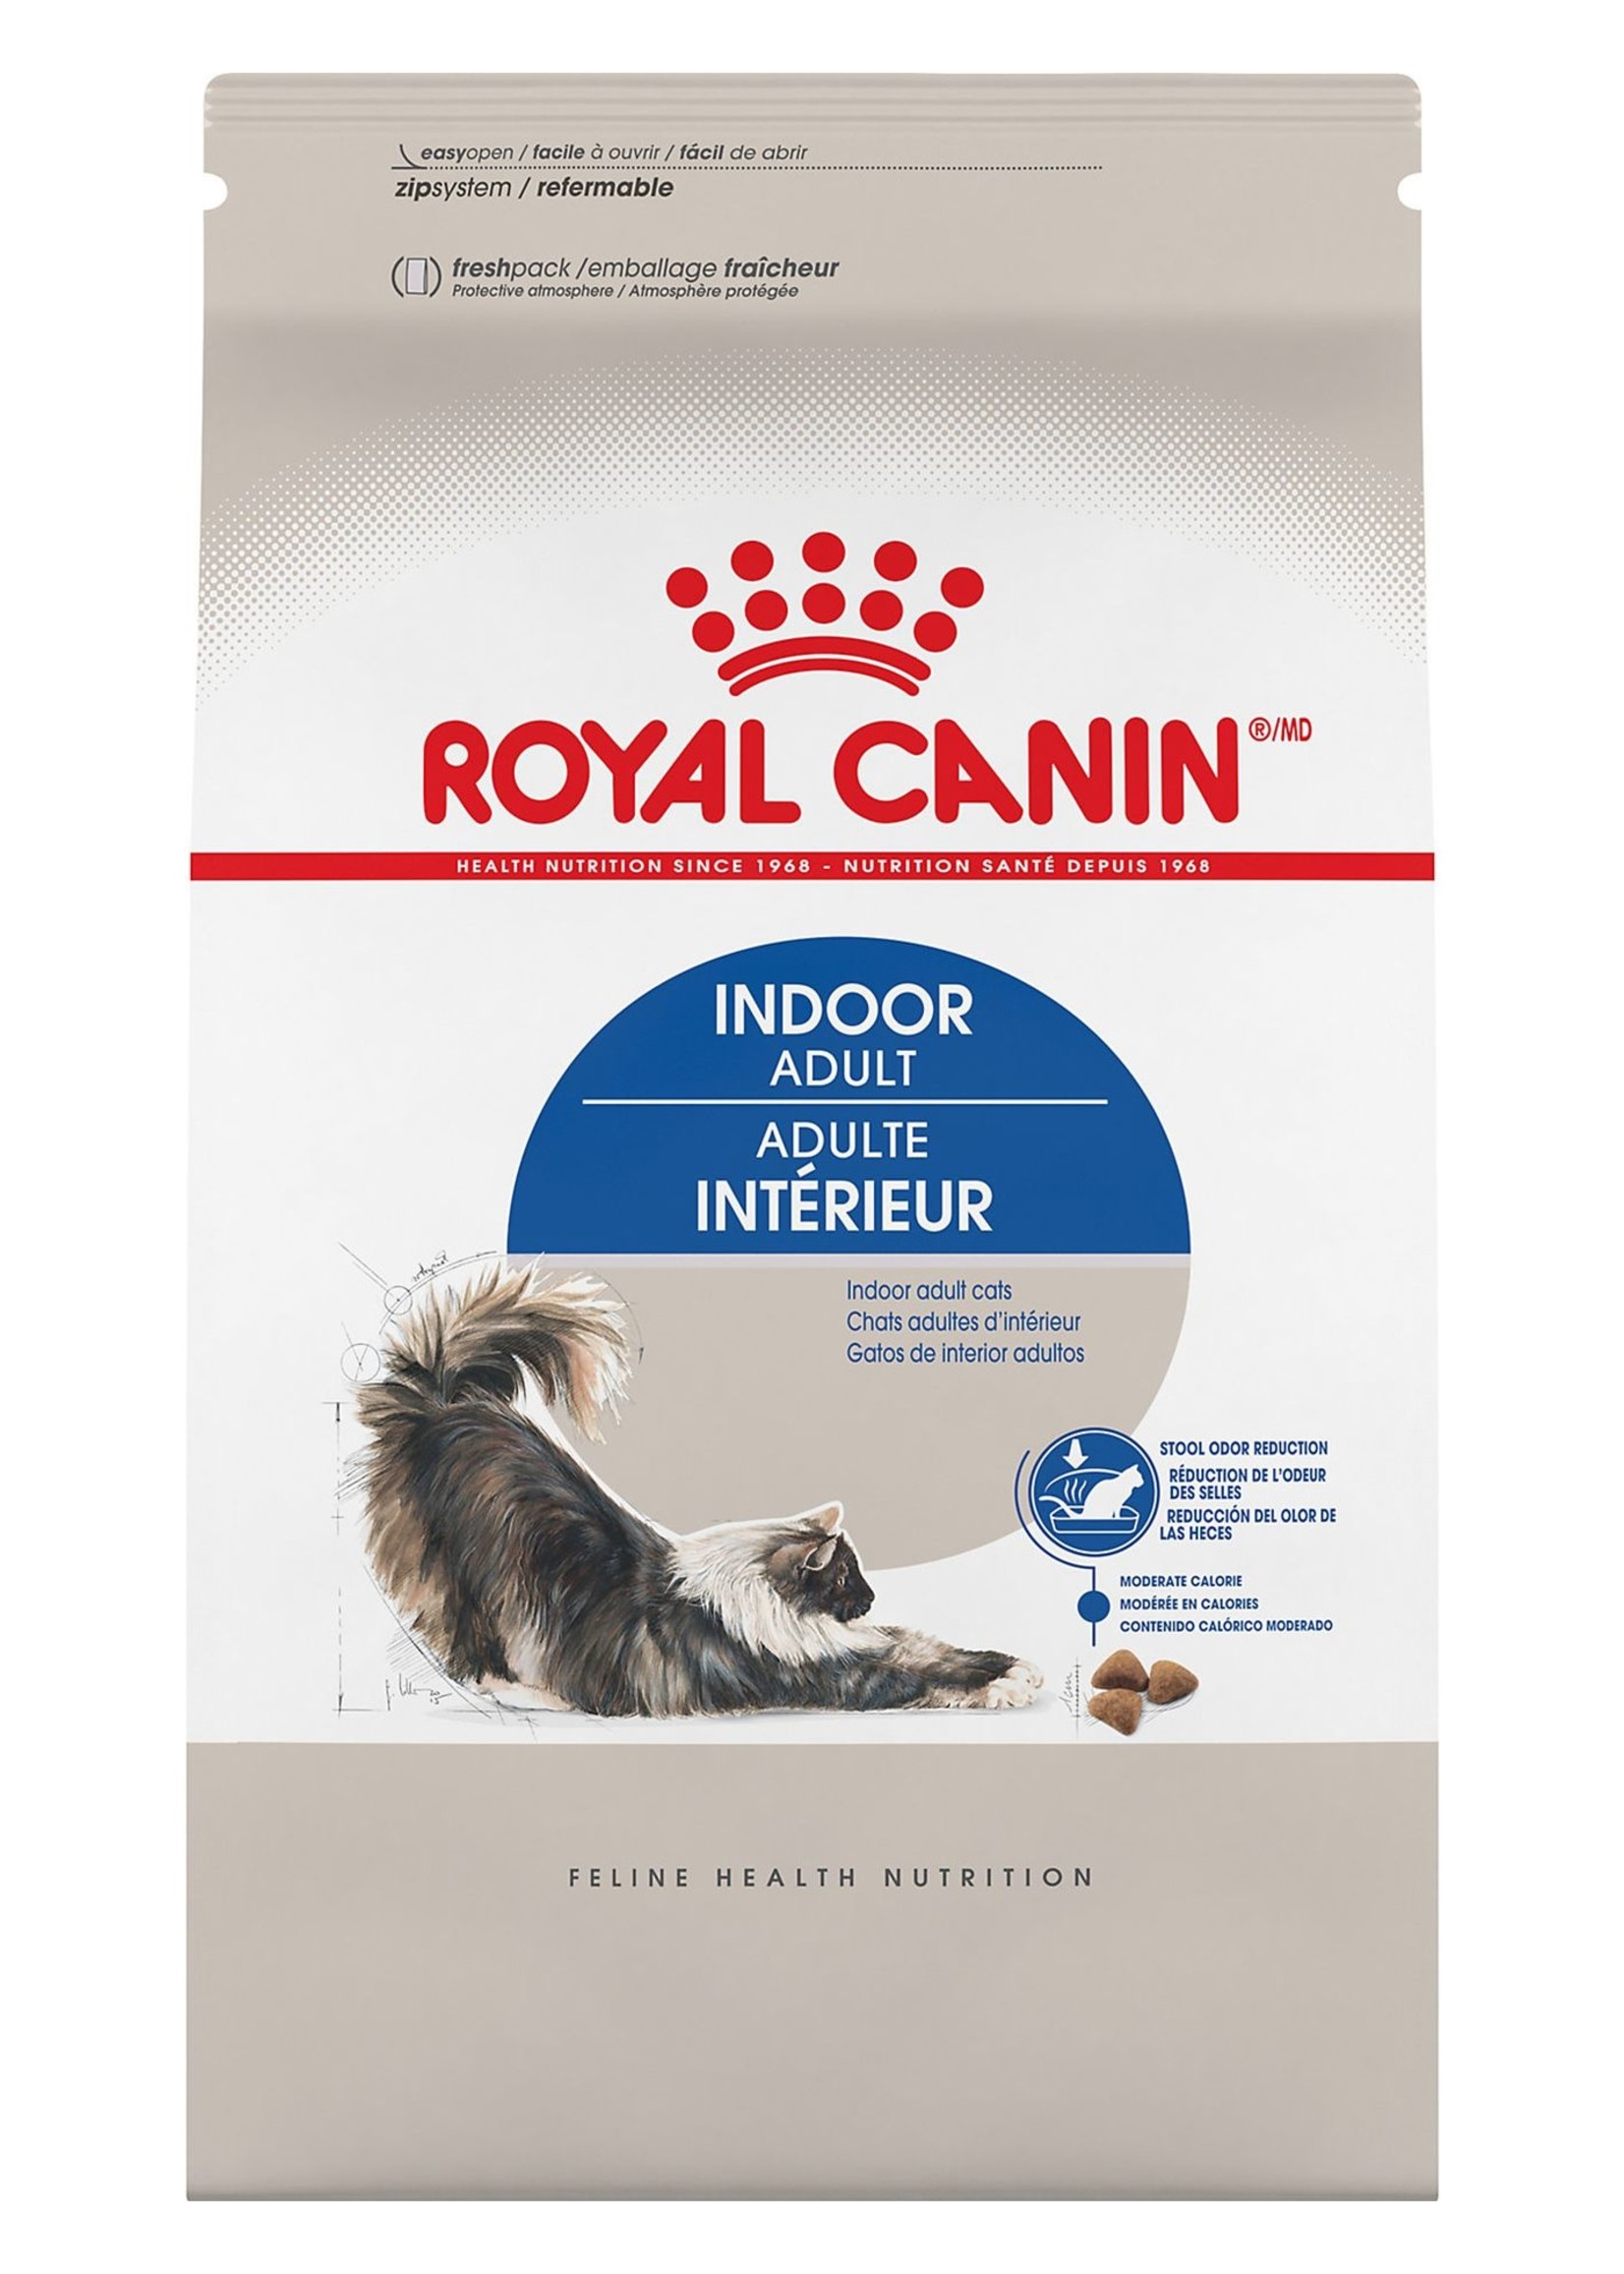 Royal Canin® Royal Canin Cat Adult Indoor 7lb